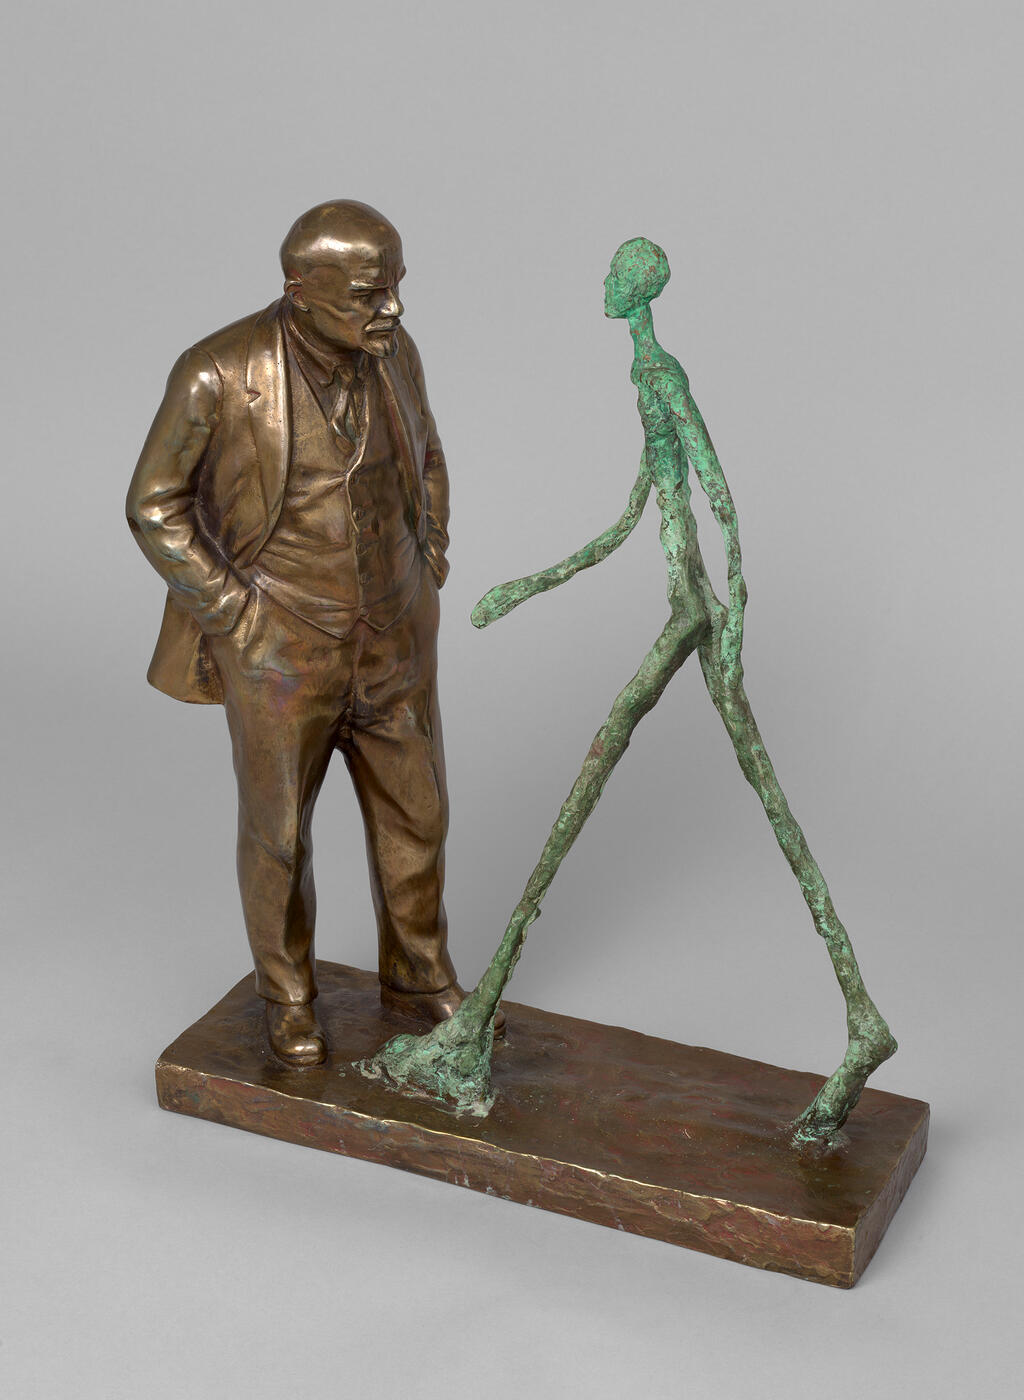 Lenin and Giacometti